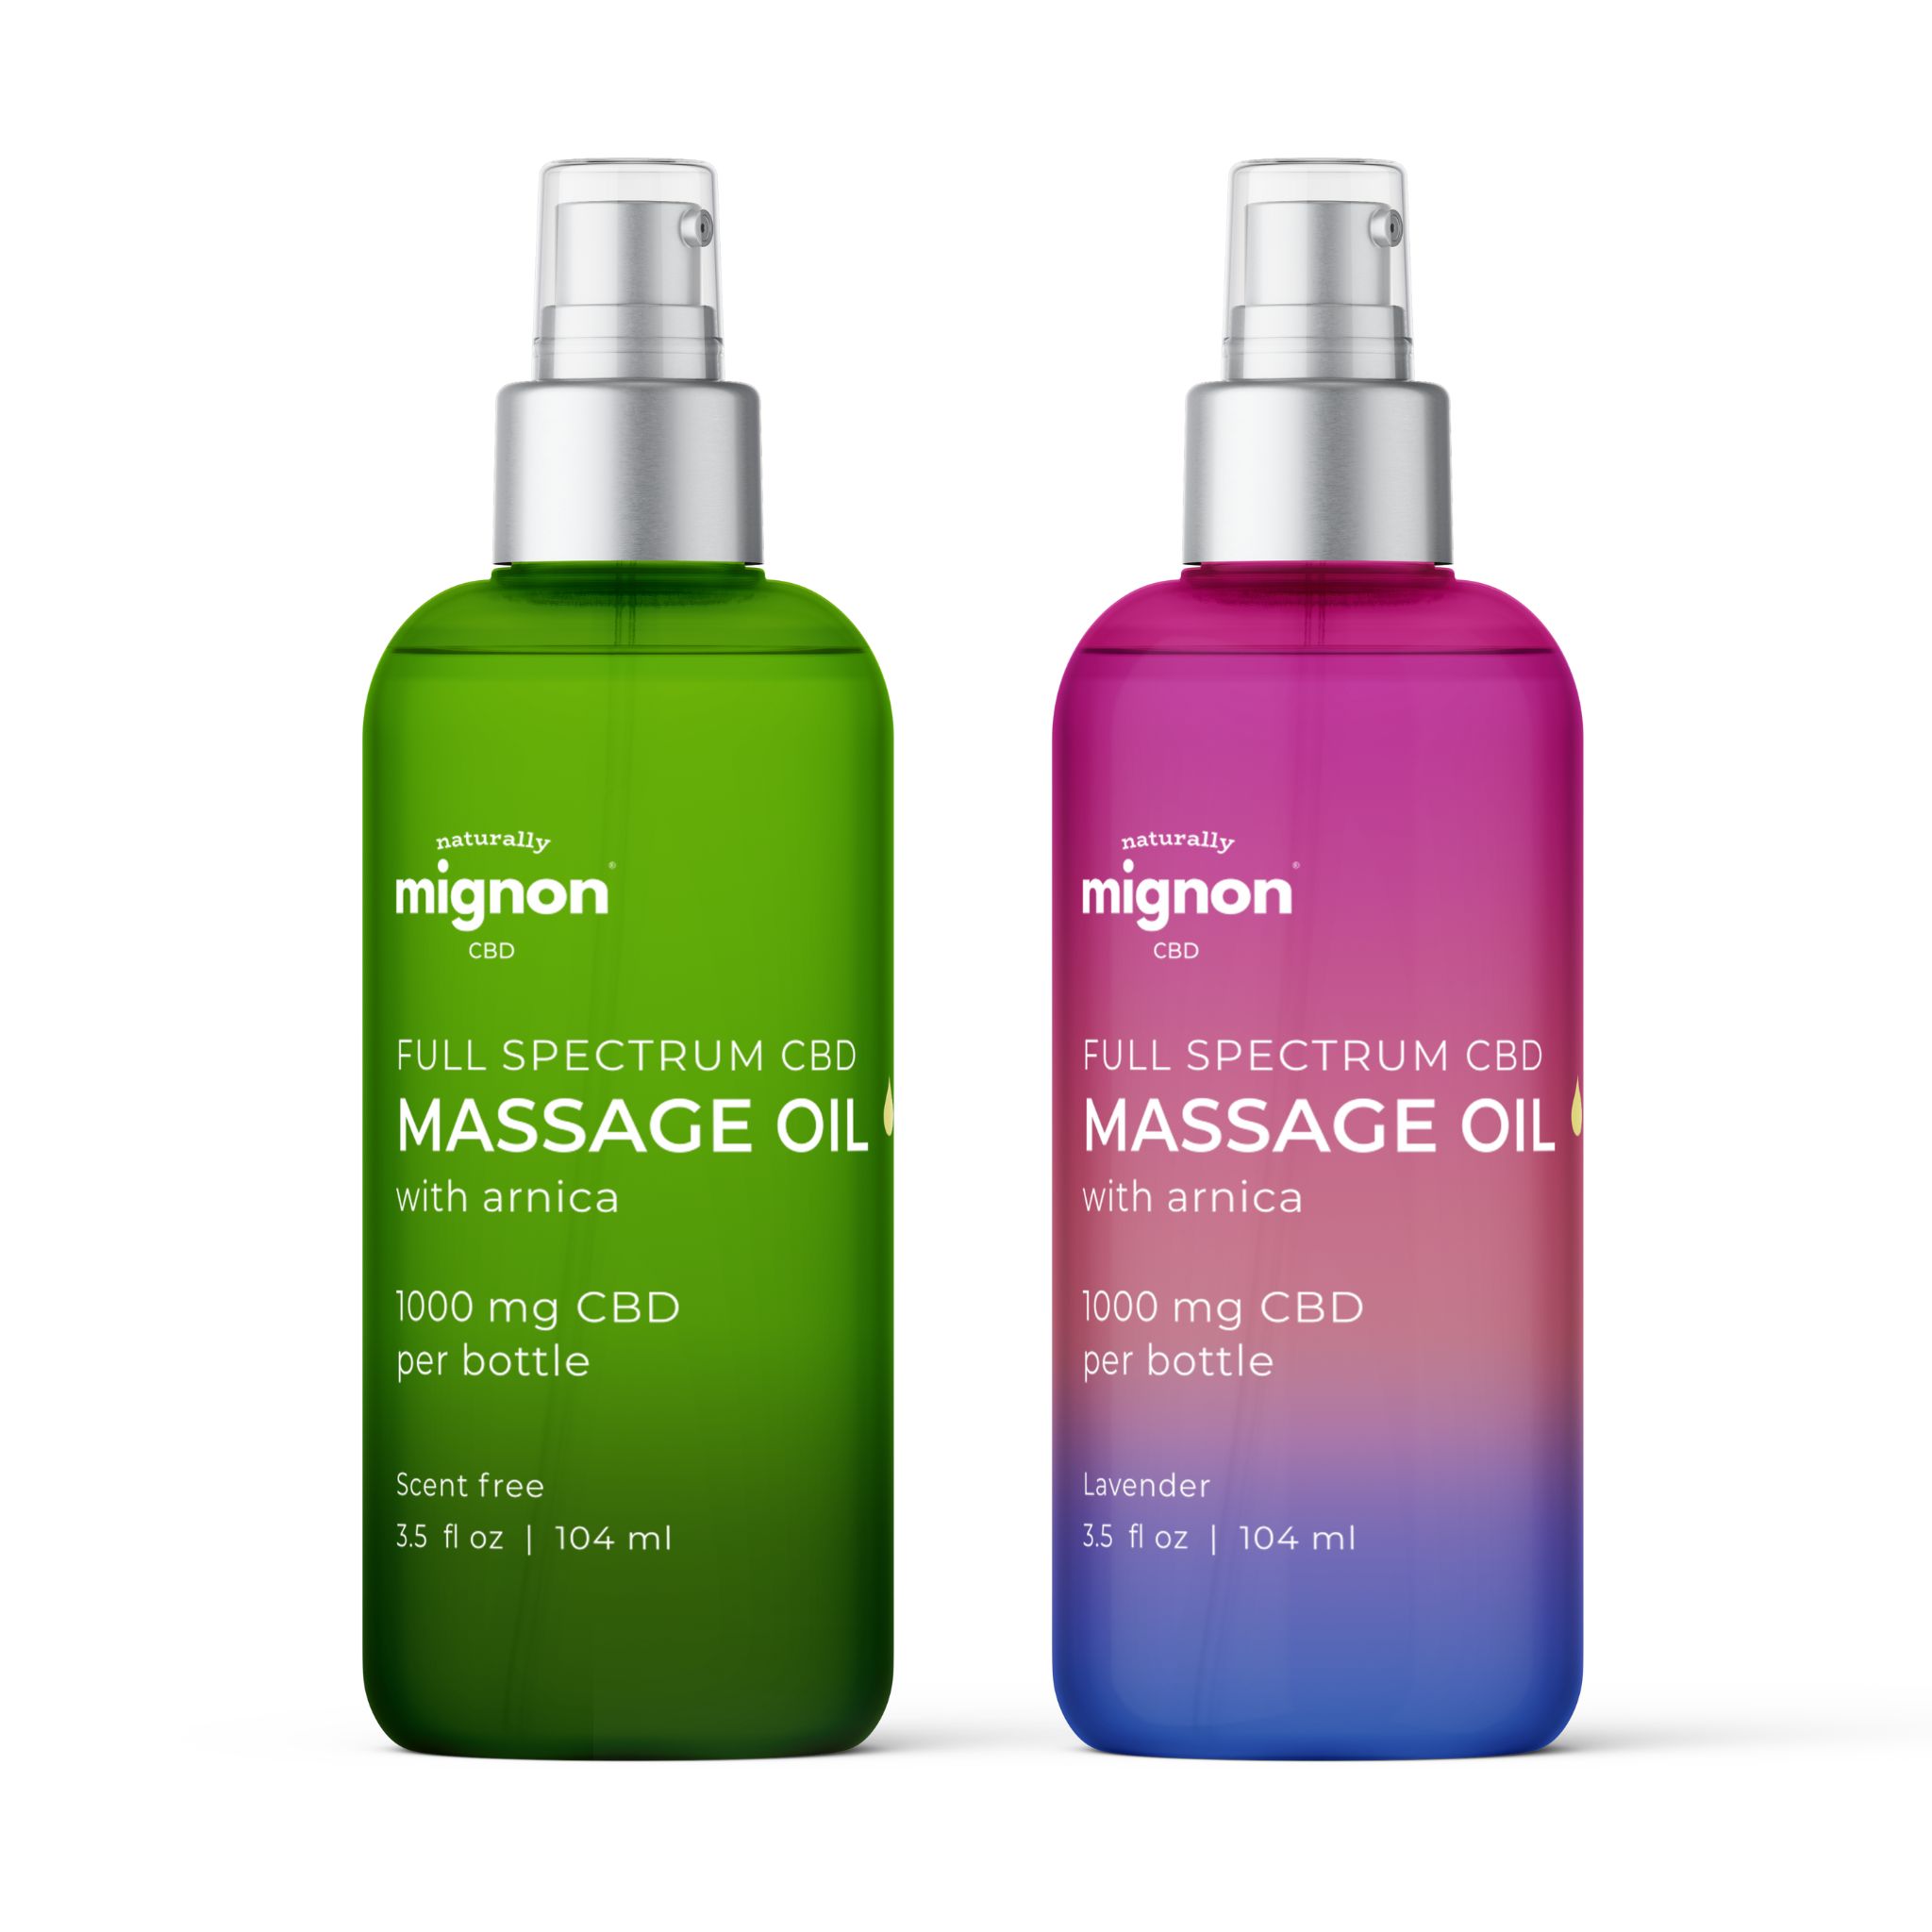 CBD Massage Oil and Topical Pain Reliever - Naturally Mignon CBD